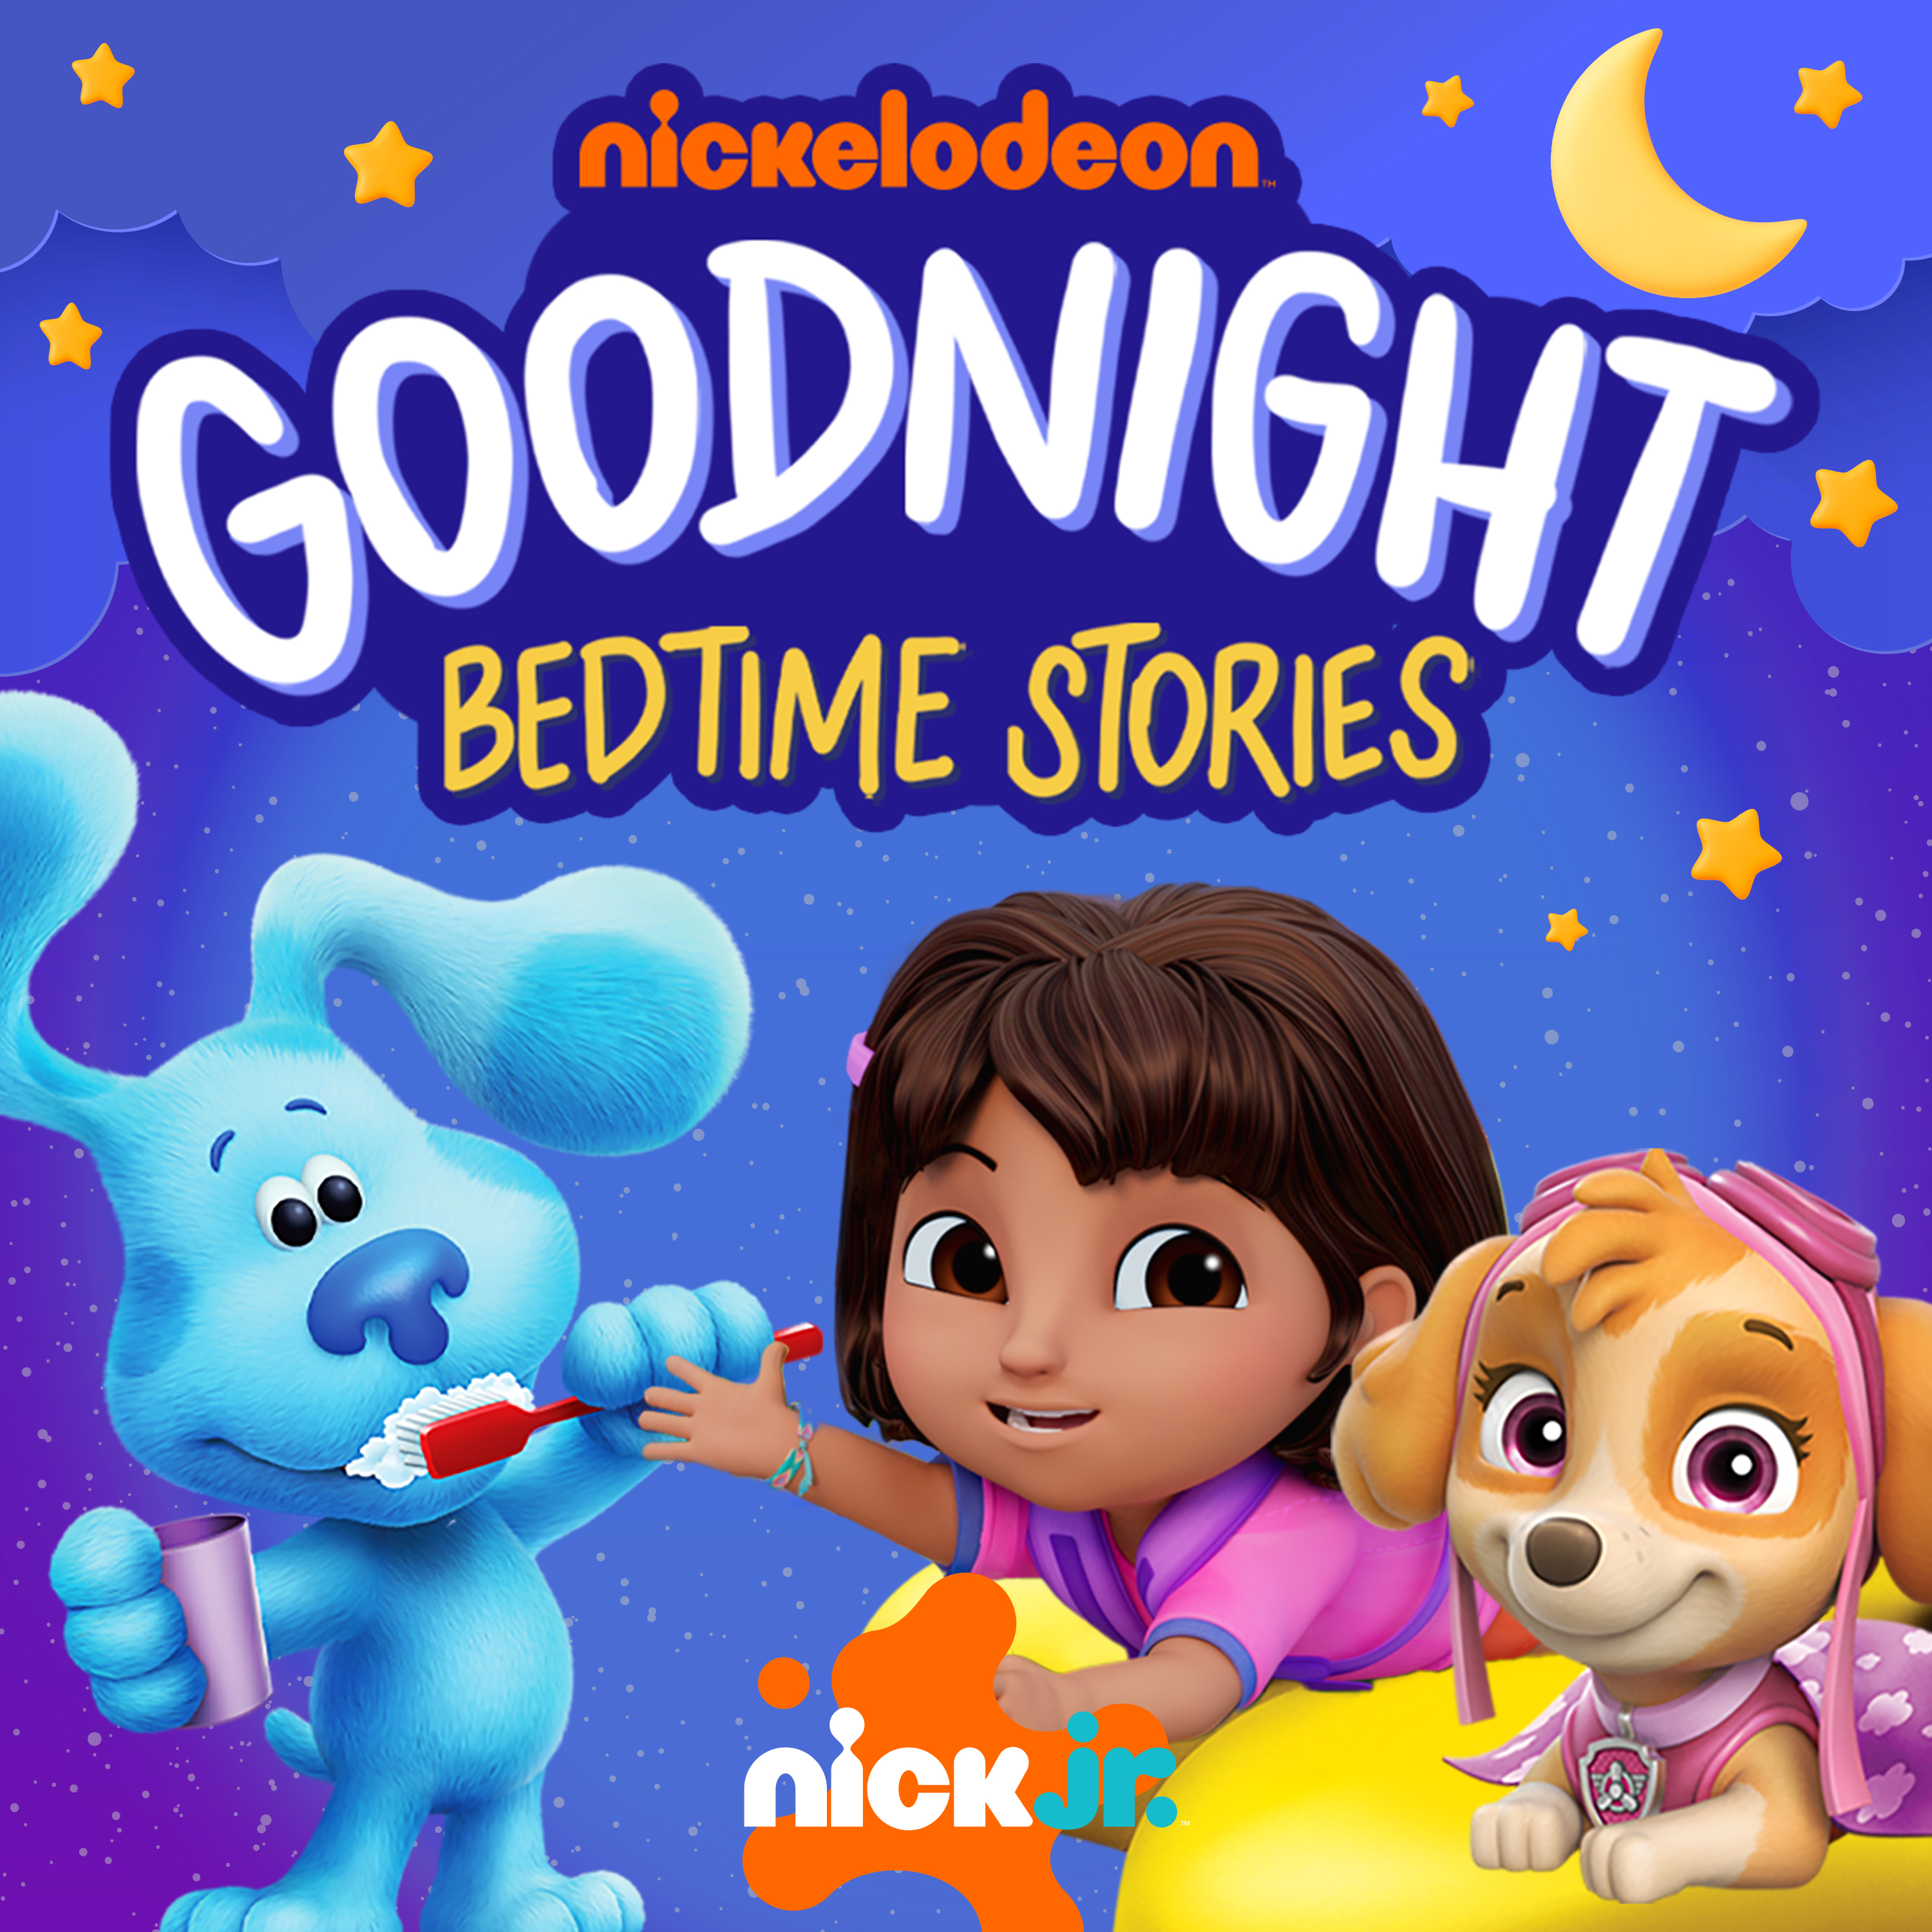 Nickelodeons Goodnight Bedtime Stories